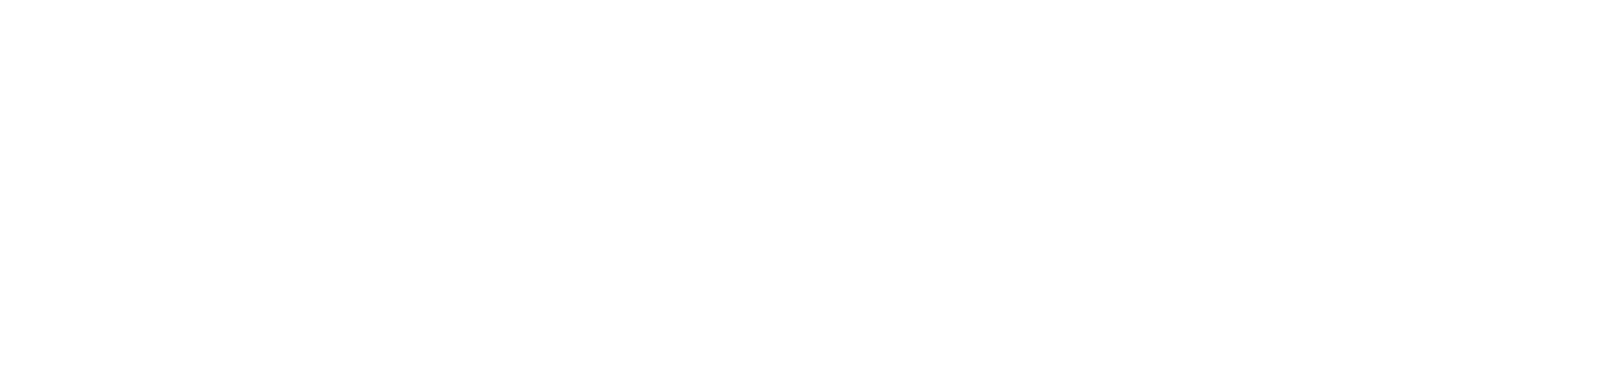 logo easyshop blanc